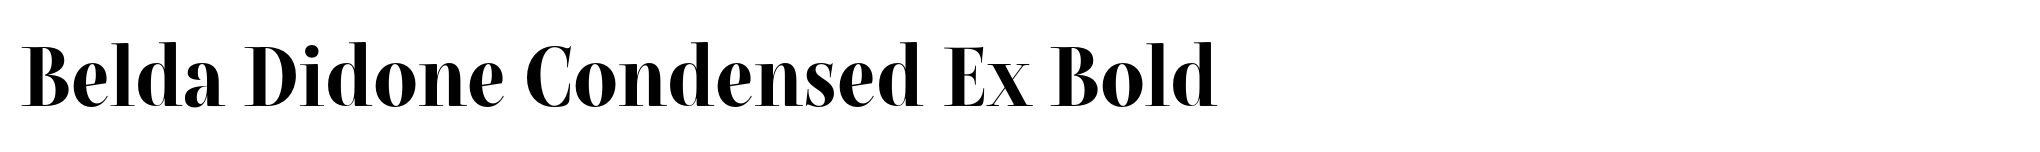 Belda Didone Condensed Ex Bold image